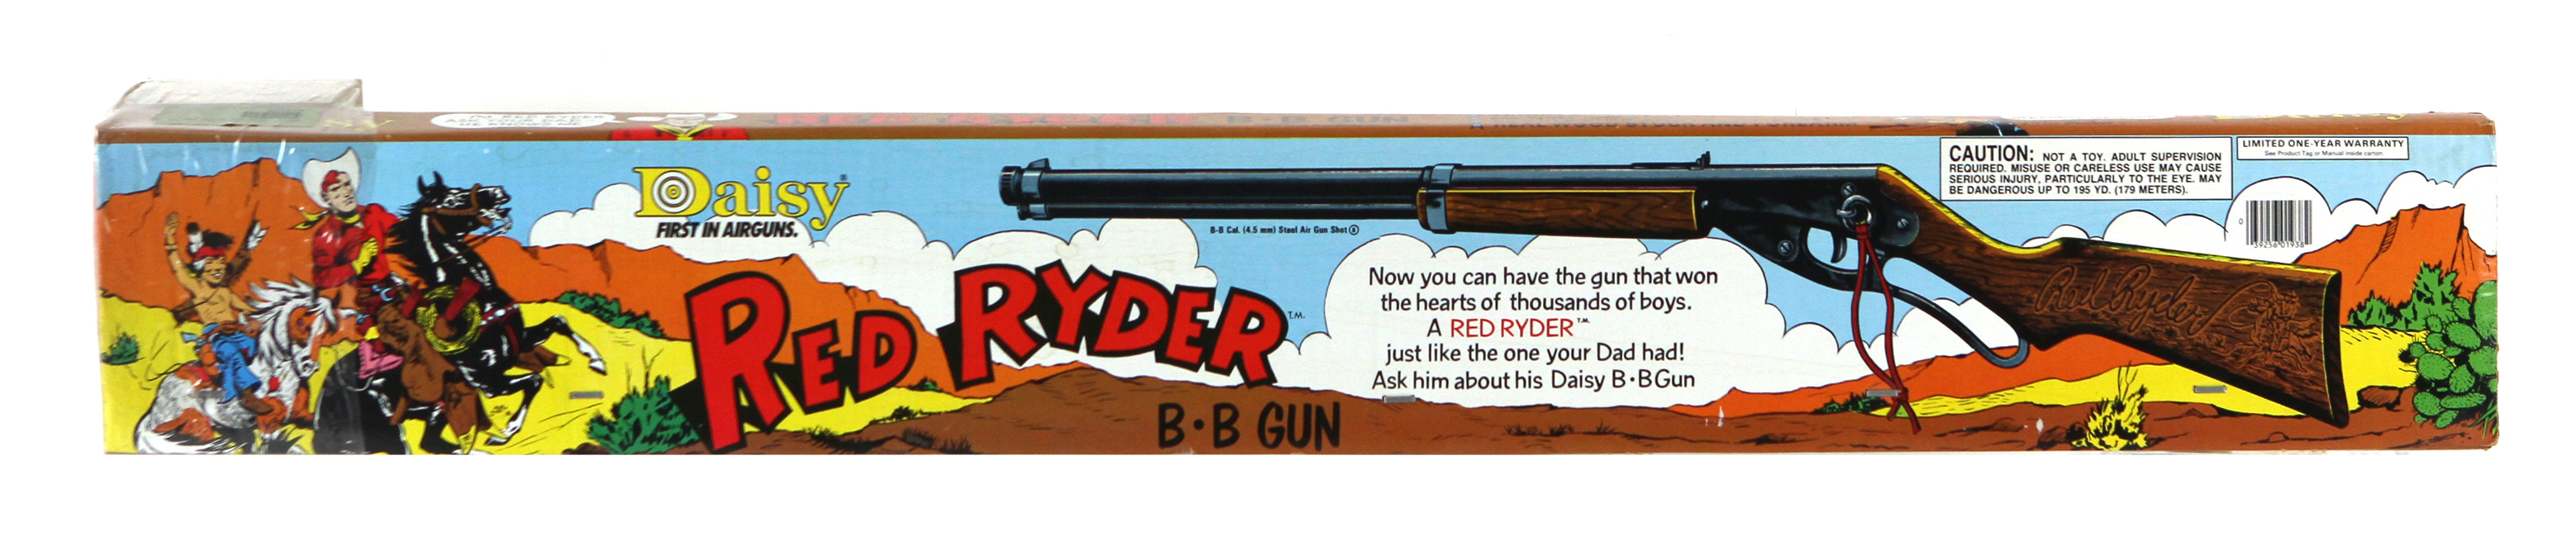 red ryder bb gun box